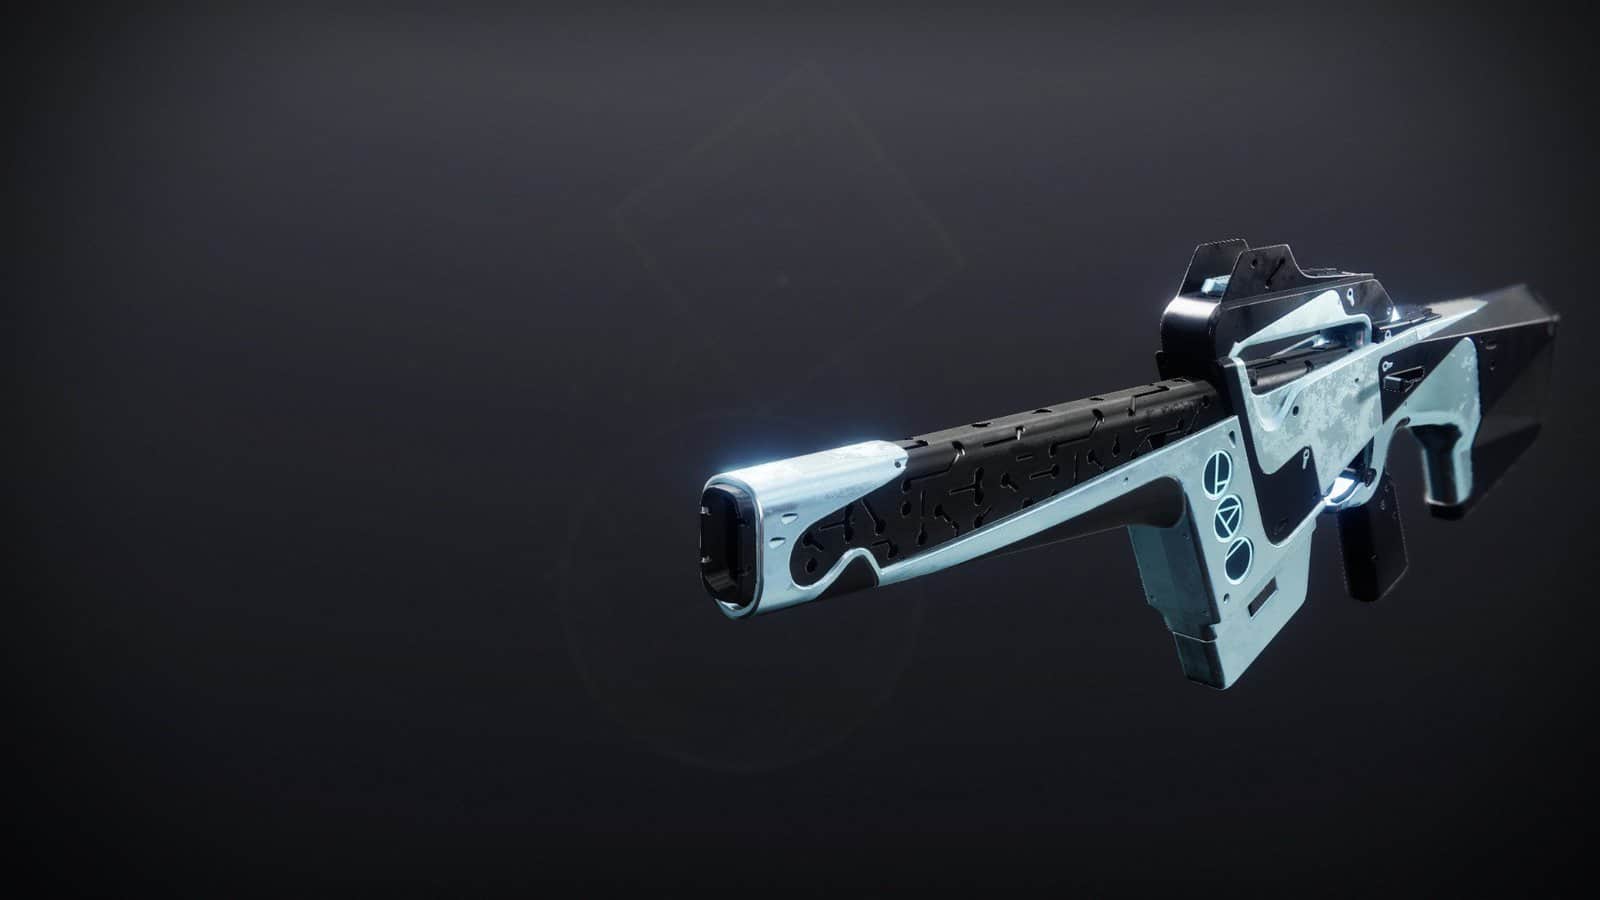 The Last Breath Destiny 2 featured auto rifle